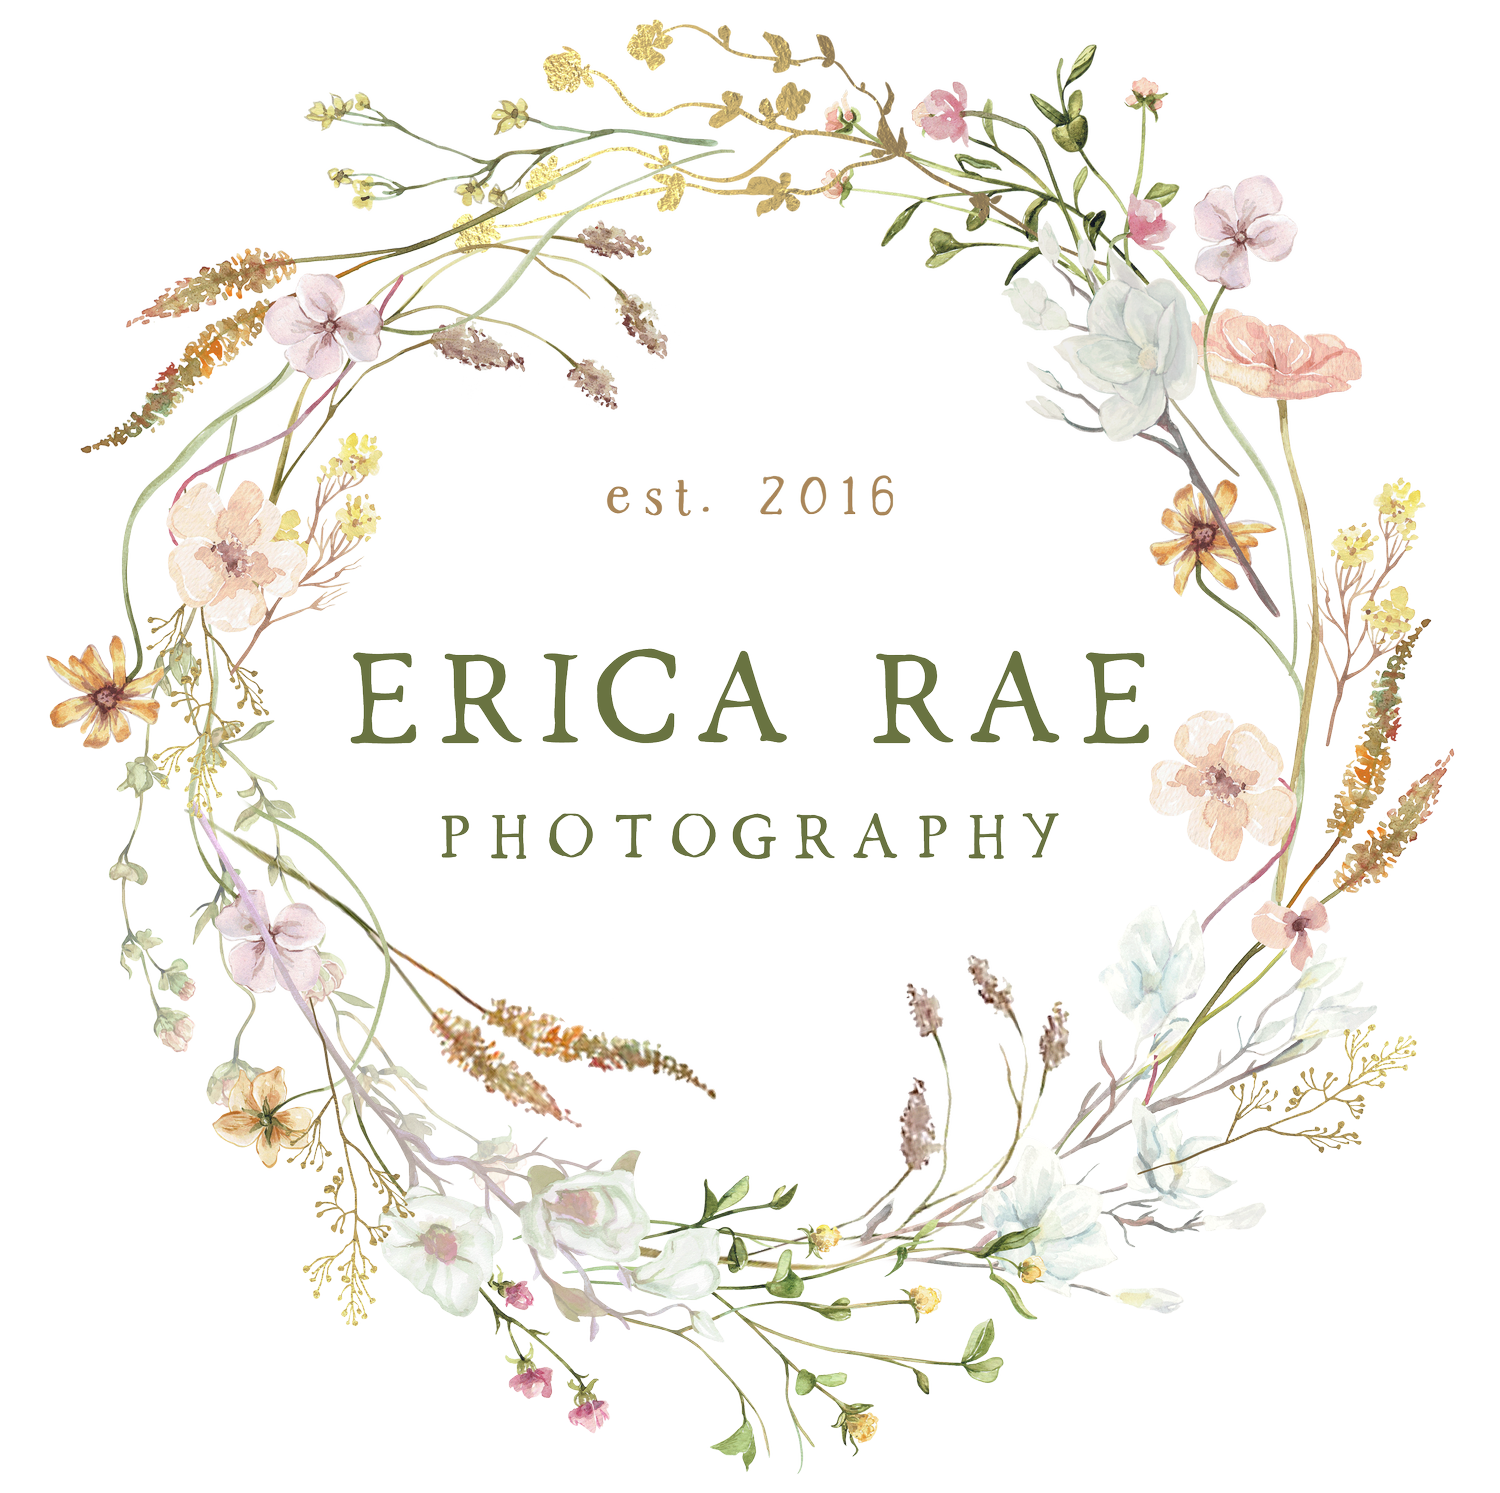 Erica Rae Photography, LLC